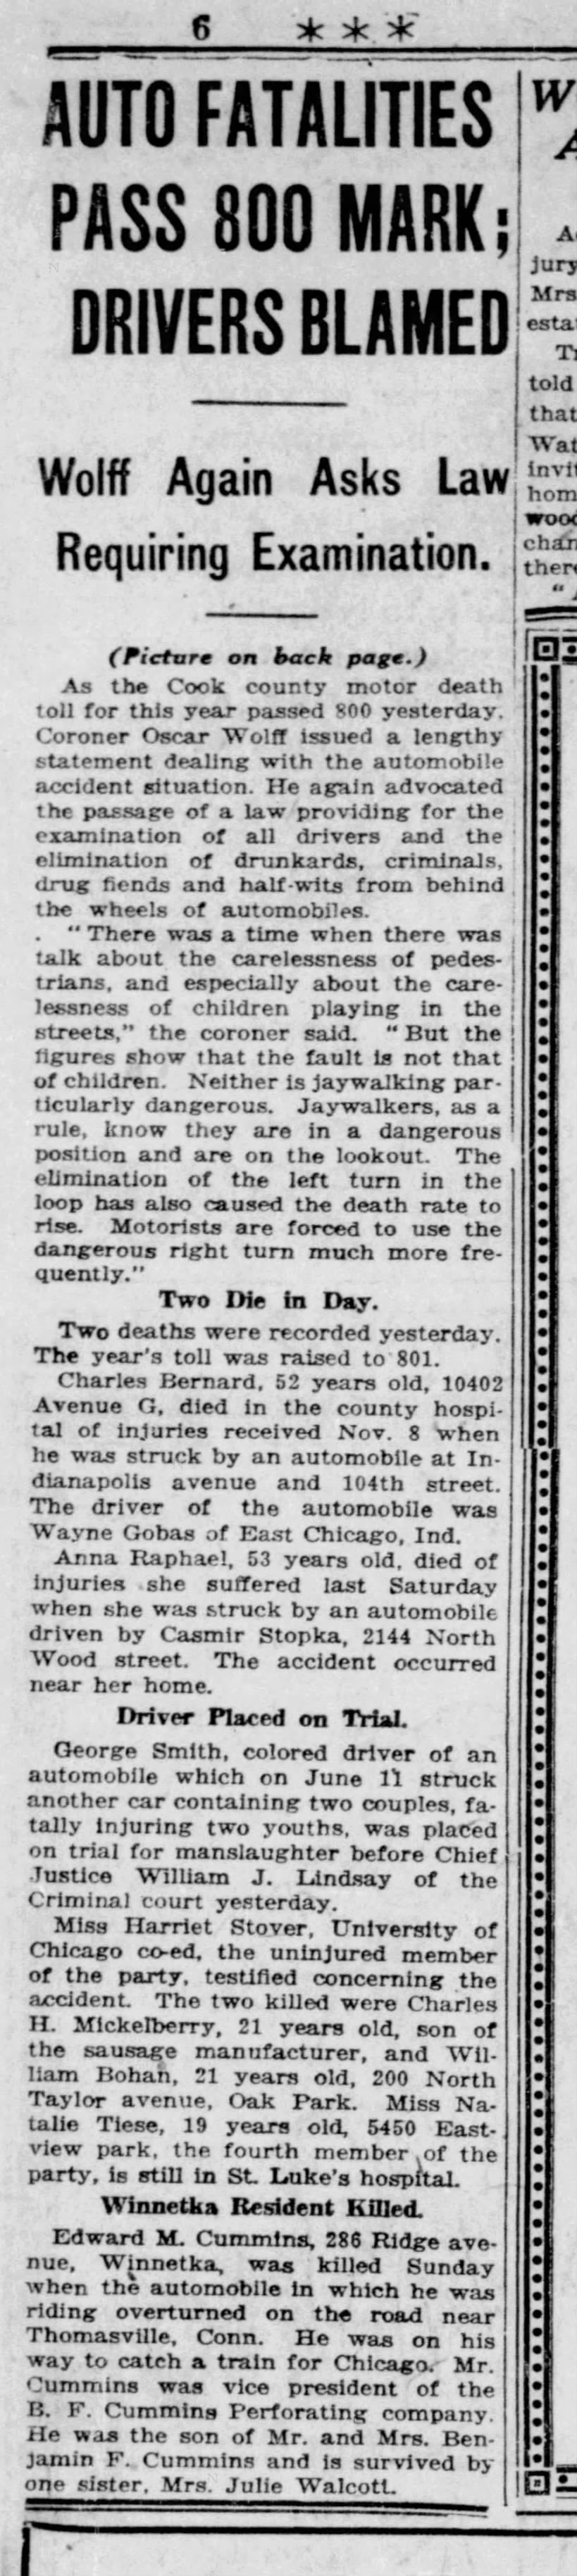 P6 C1 Mickelberry death, Chicago Daily Tribune, 23Nov1926; George Smith on trial